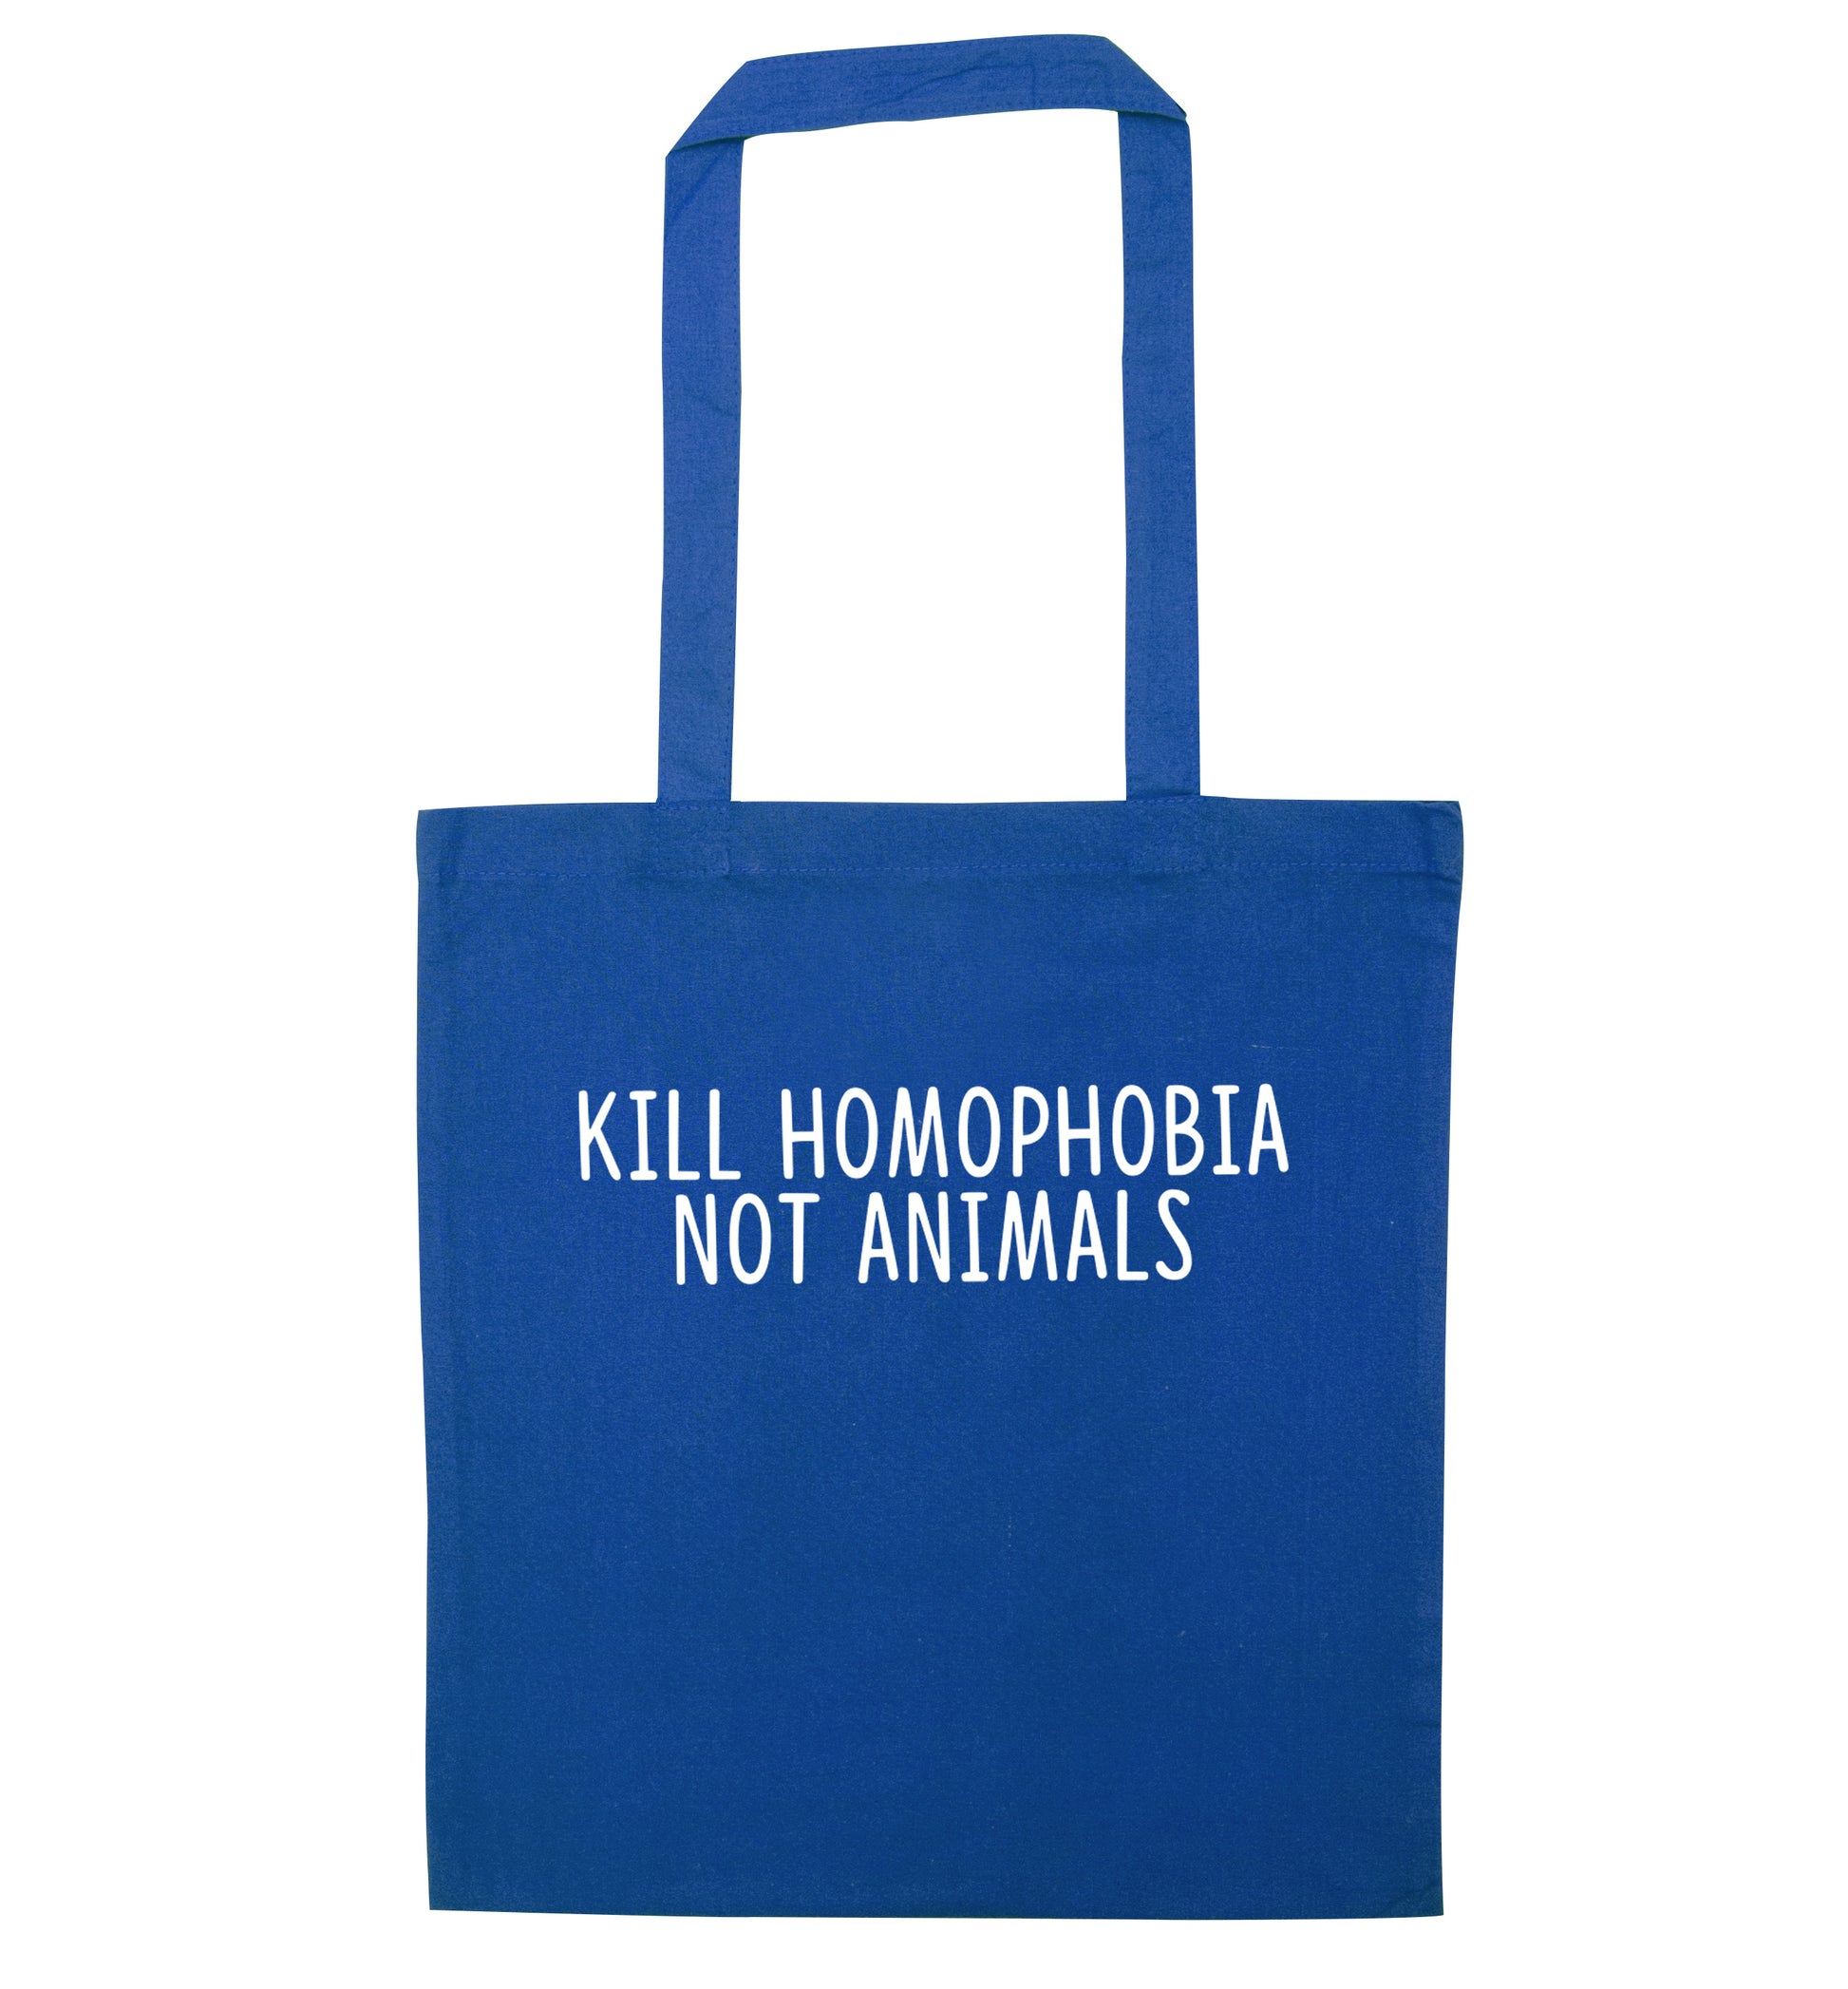 Kill Homophobia Not Animals blue tote bag